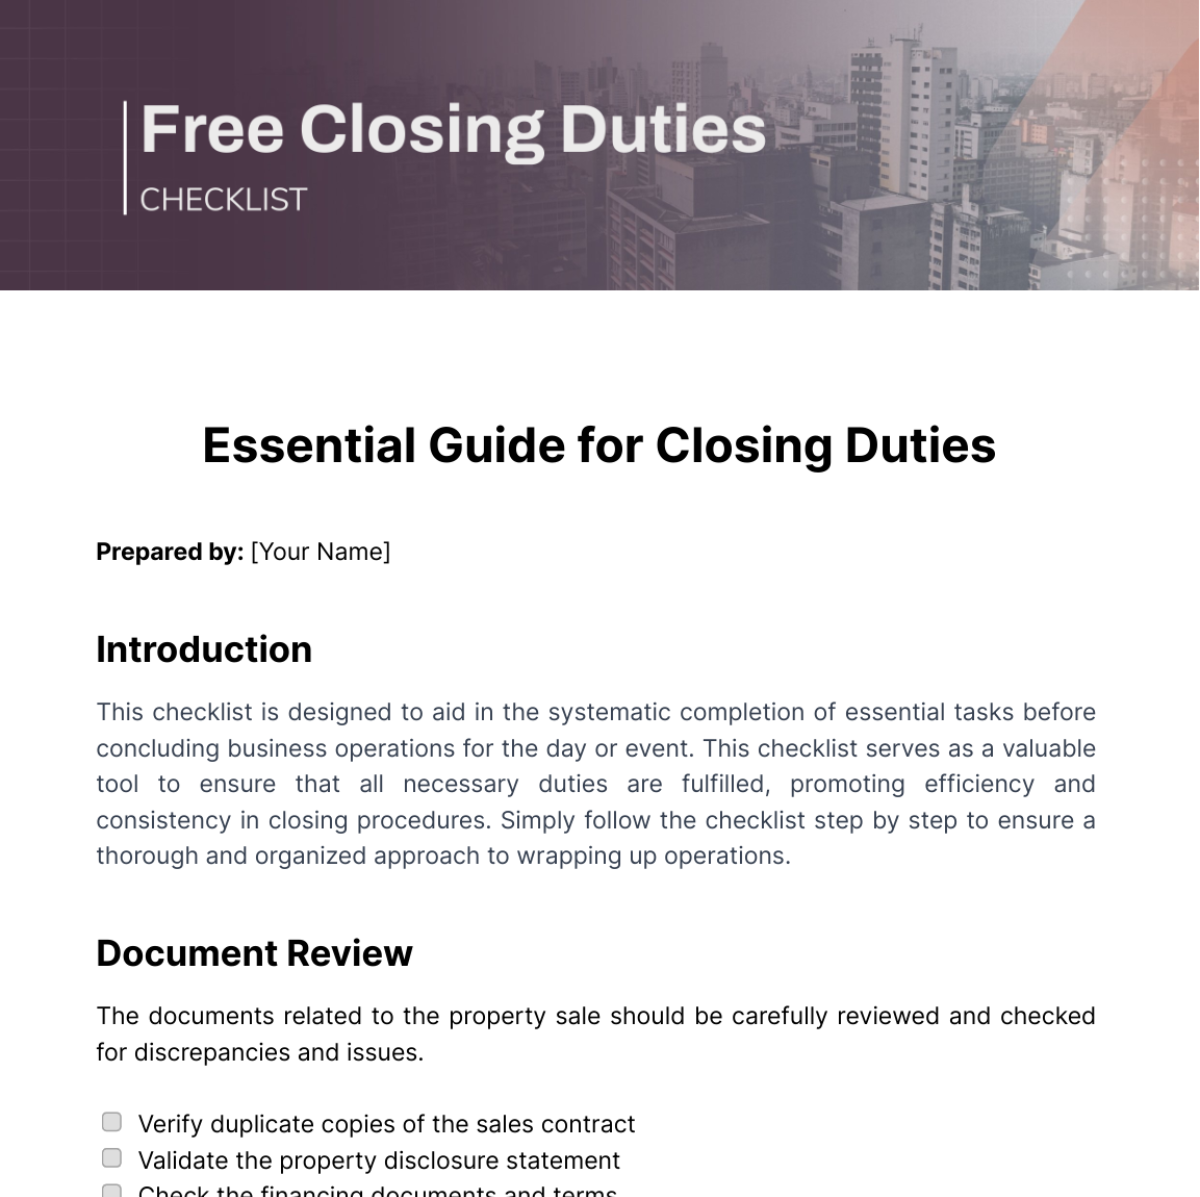 Free Closing Duties Checklist Template